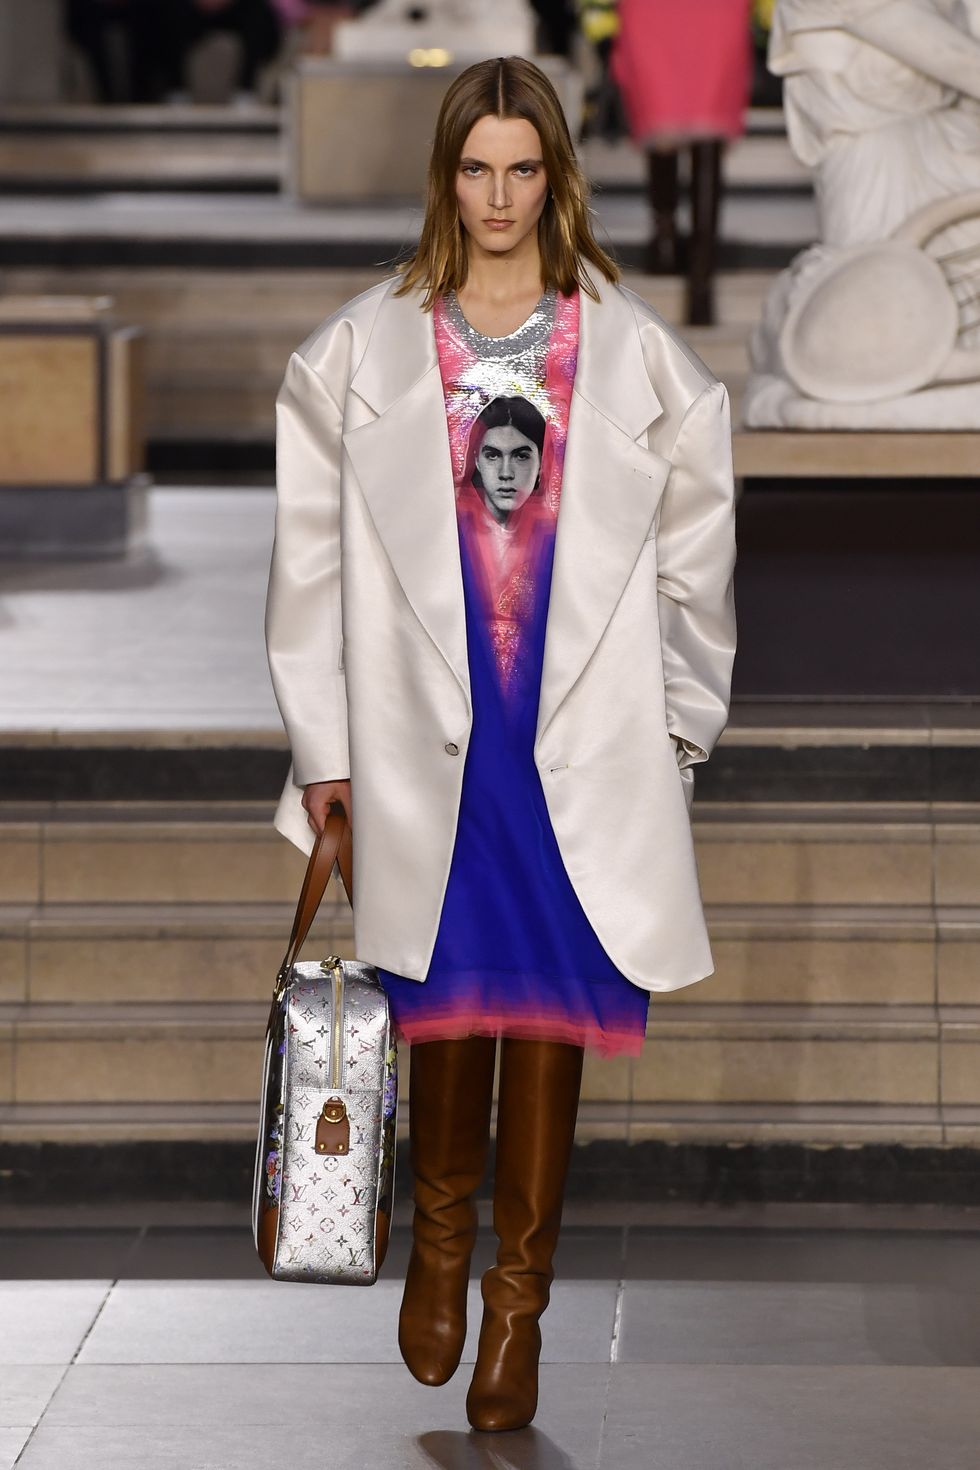 Demna Gvasalia was seen at Paris Fashion Week Spring 2022